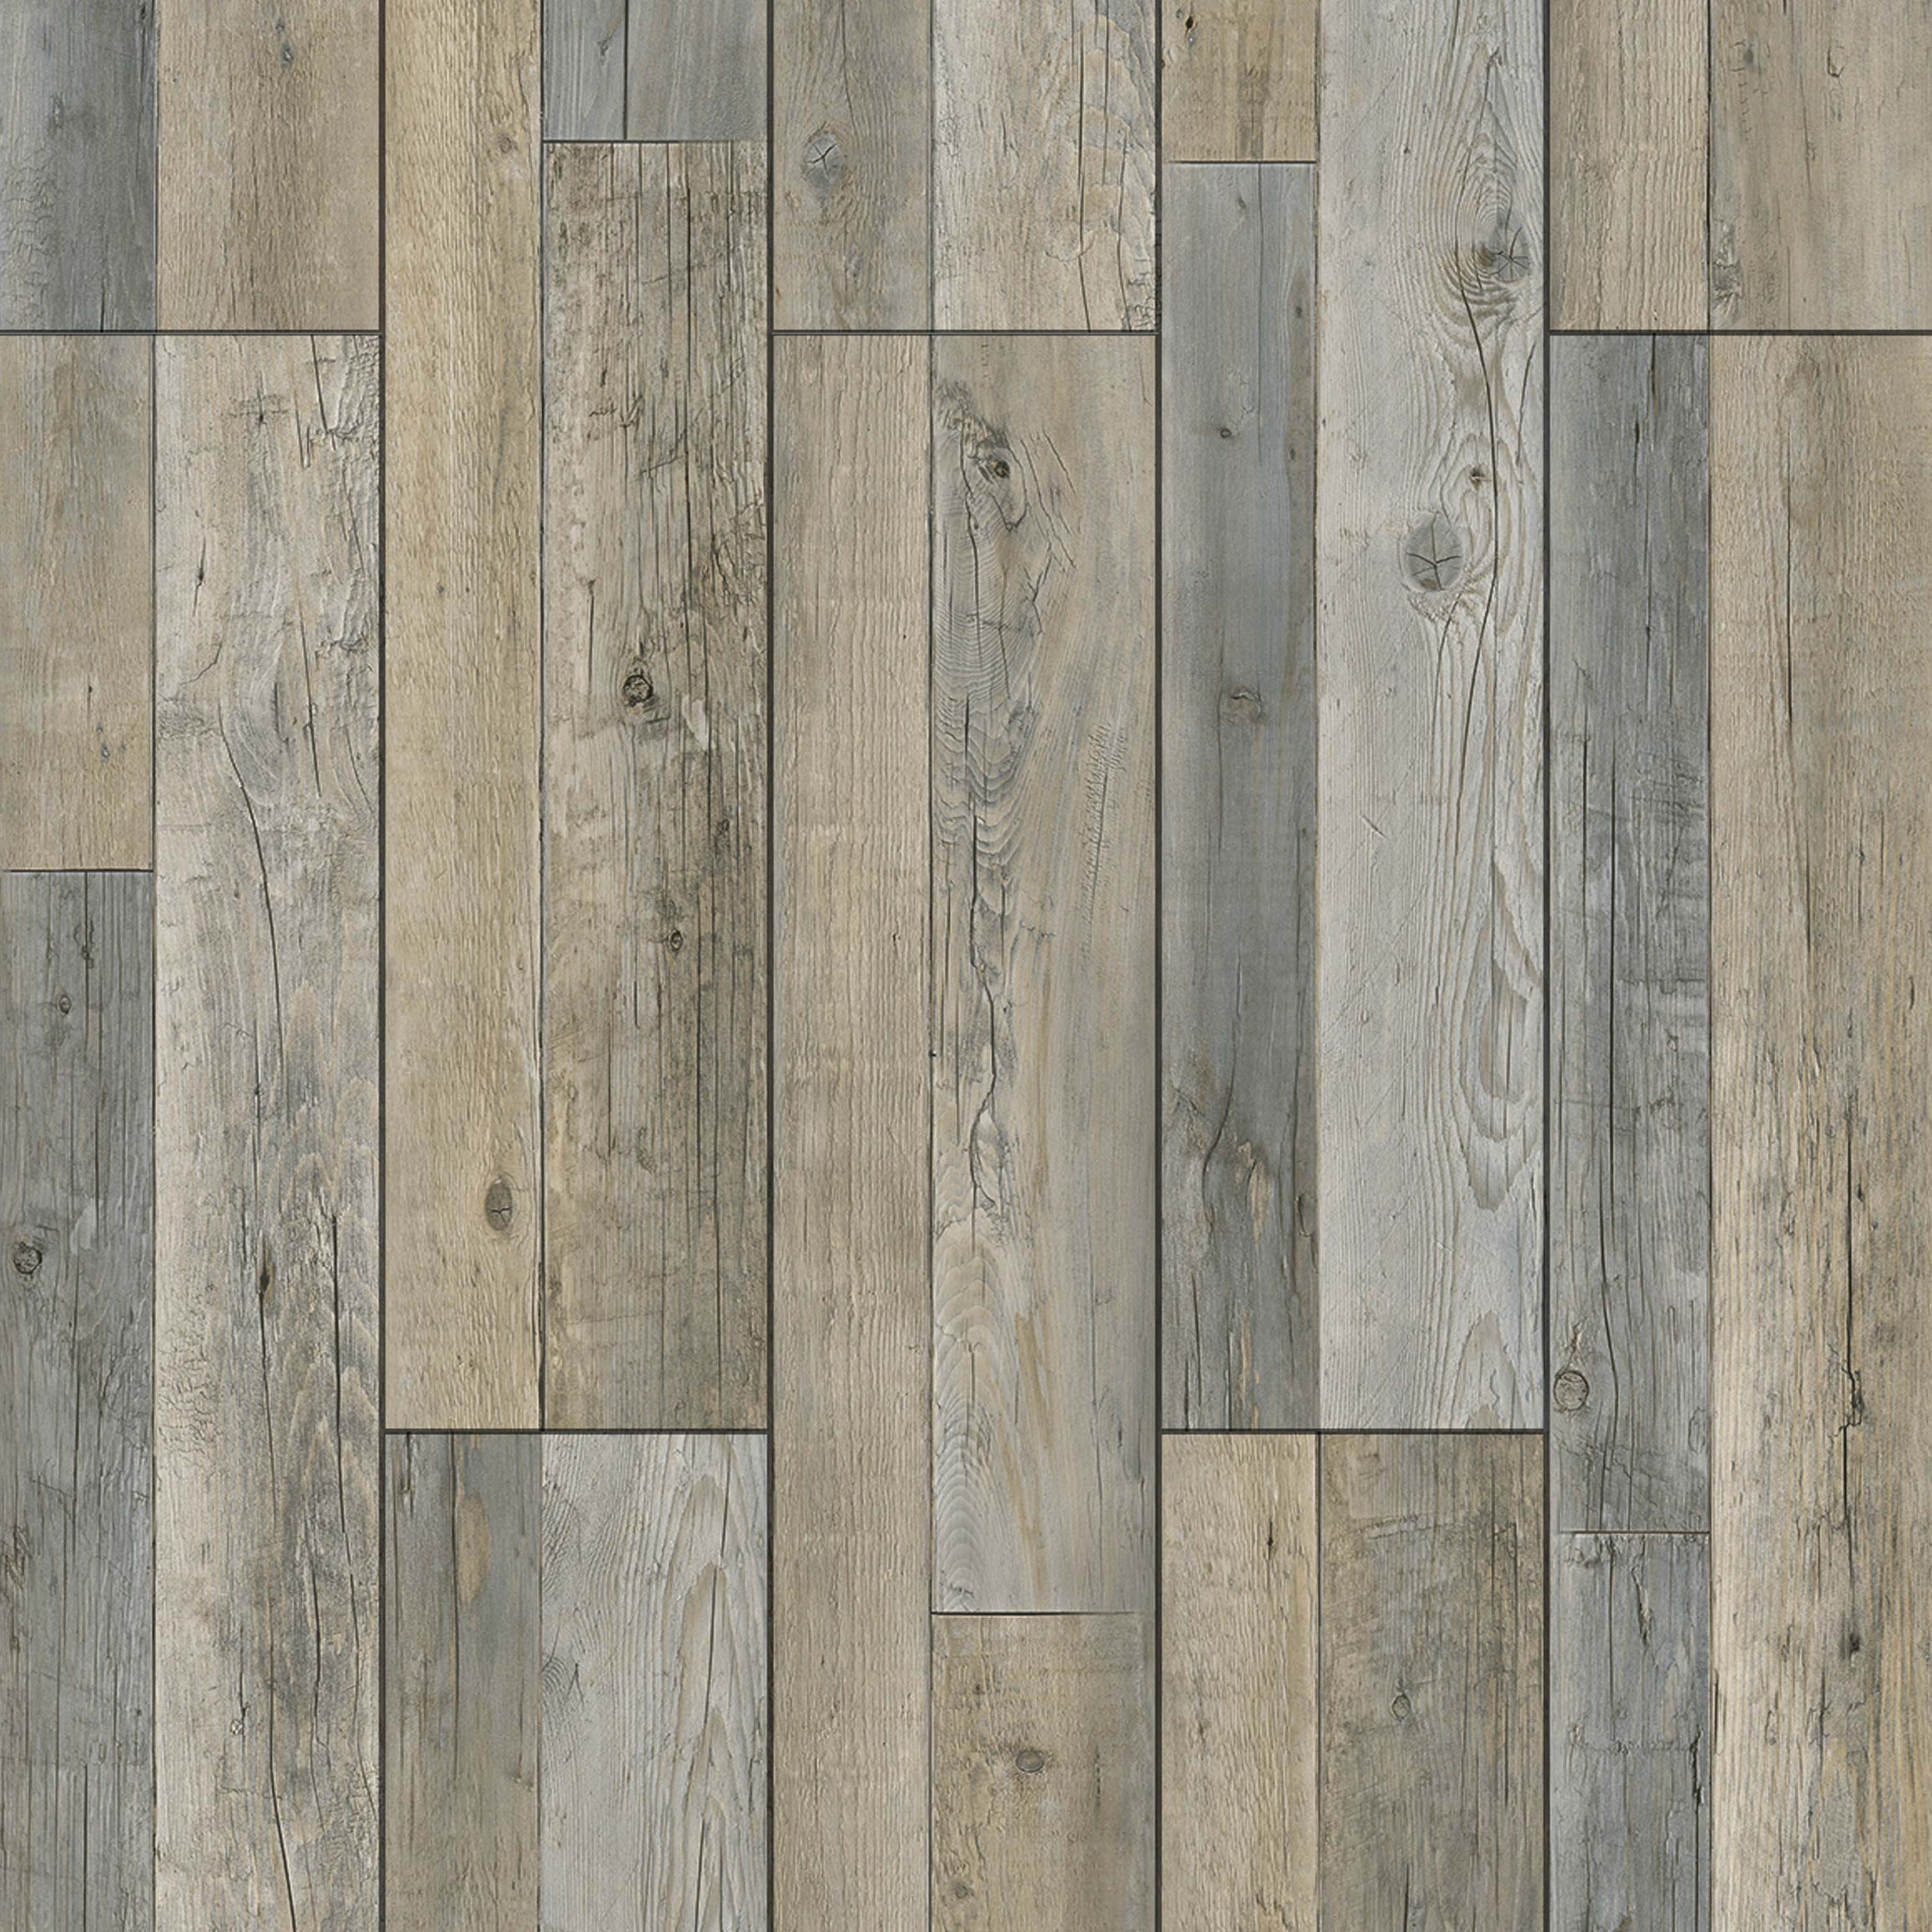 18 Years Factory Timber Overlay Flooring -
 Embossed Texture PVC Virgin Material Plastic Vinyl Tiles SPC Flooring – Kangton